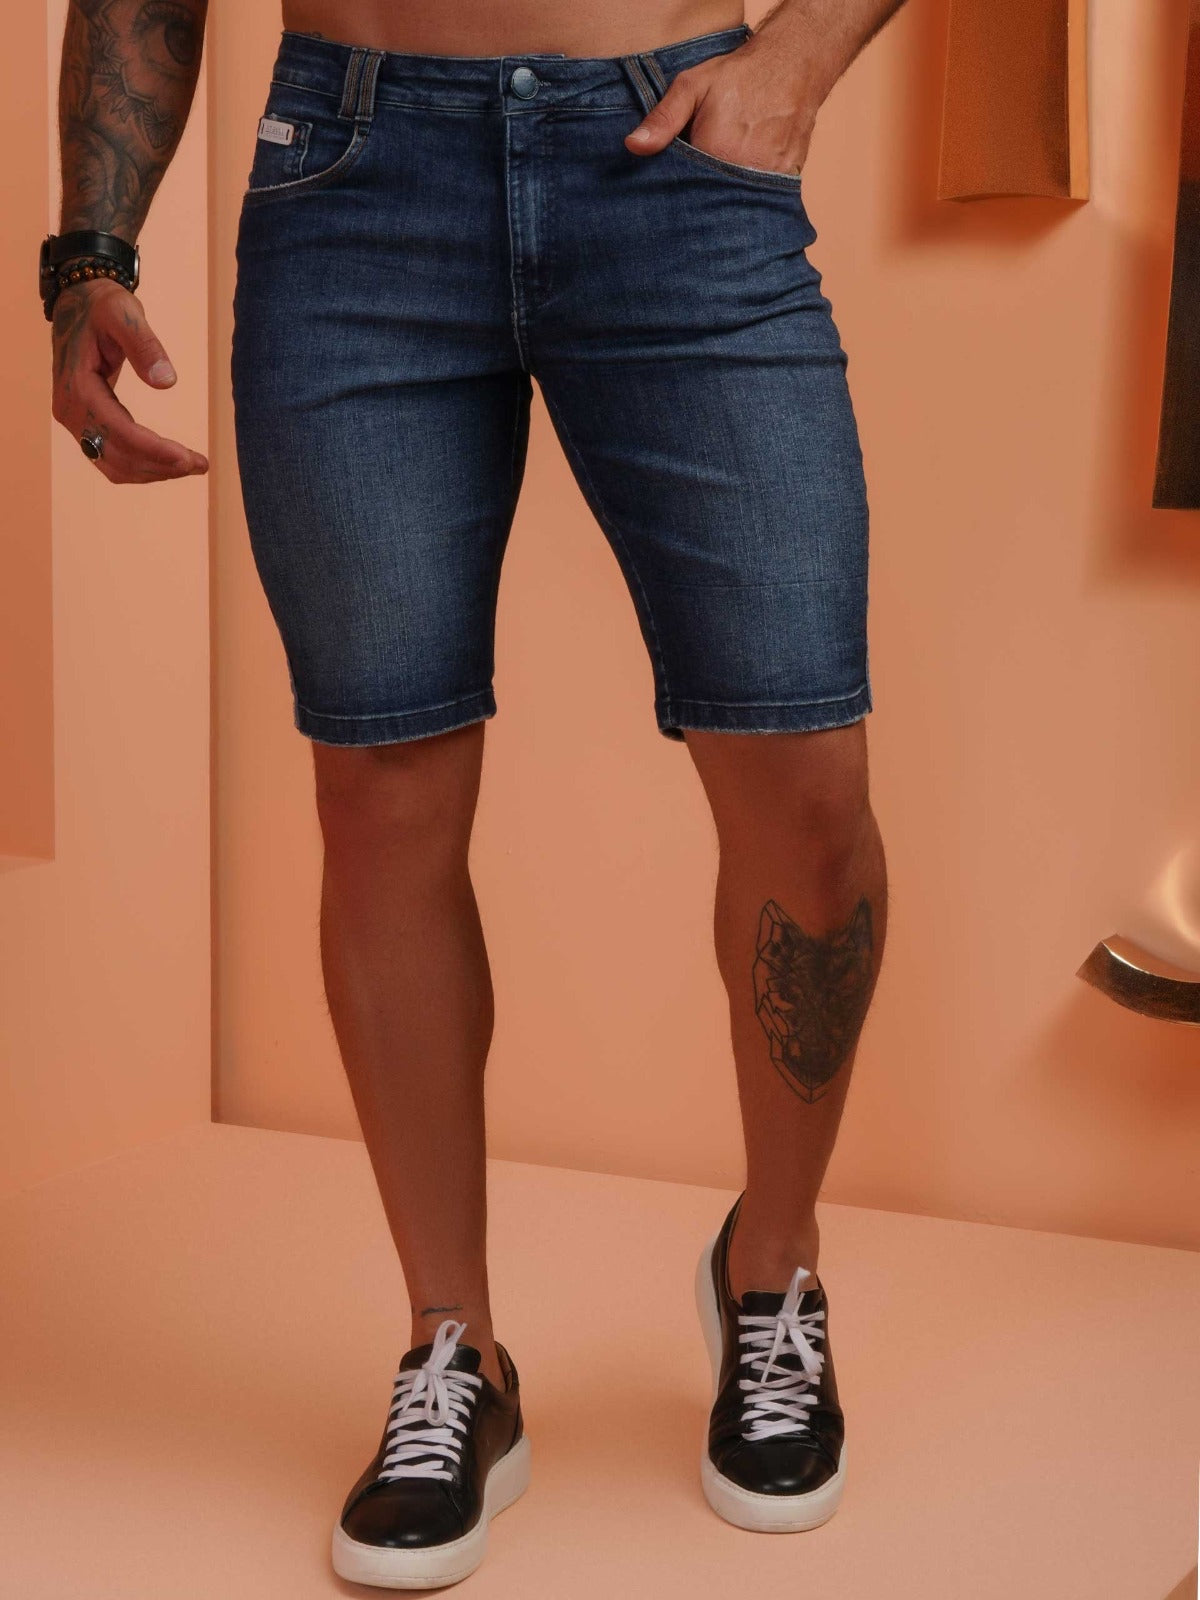 Pit Bull Jeans Men's Jeans Shorts 62597